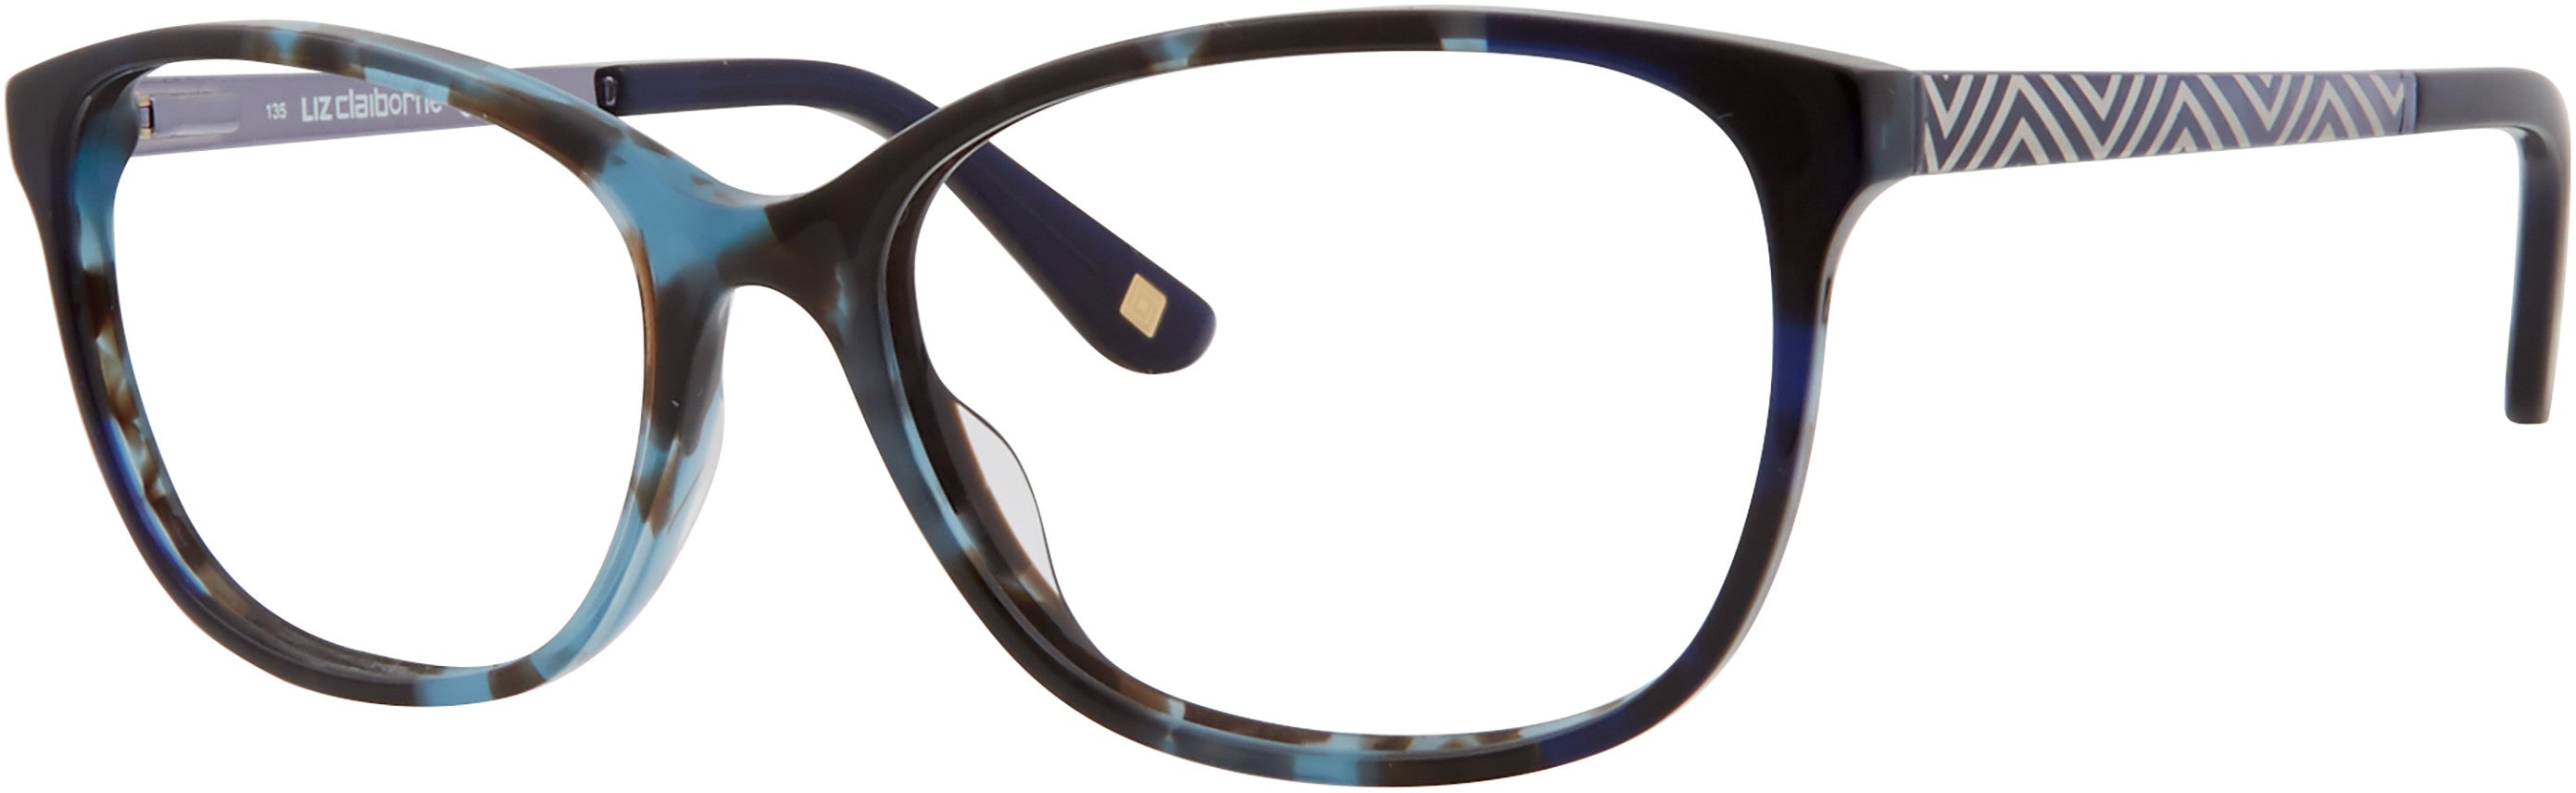  Liz Claiborne 647 Cat Eye/butterfly Eyeglasses 0IPR-0IPR  Havana Blue (00 Demo Lens)